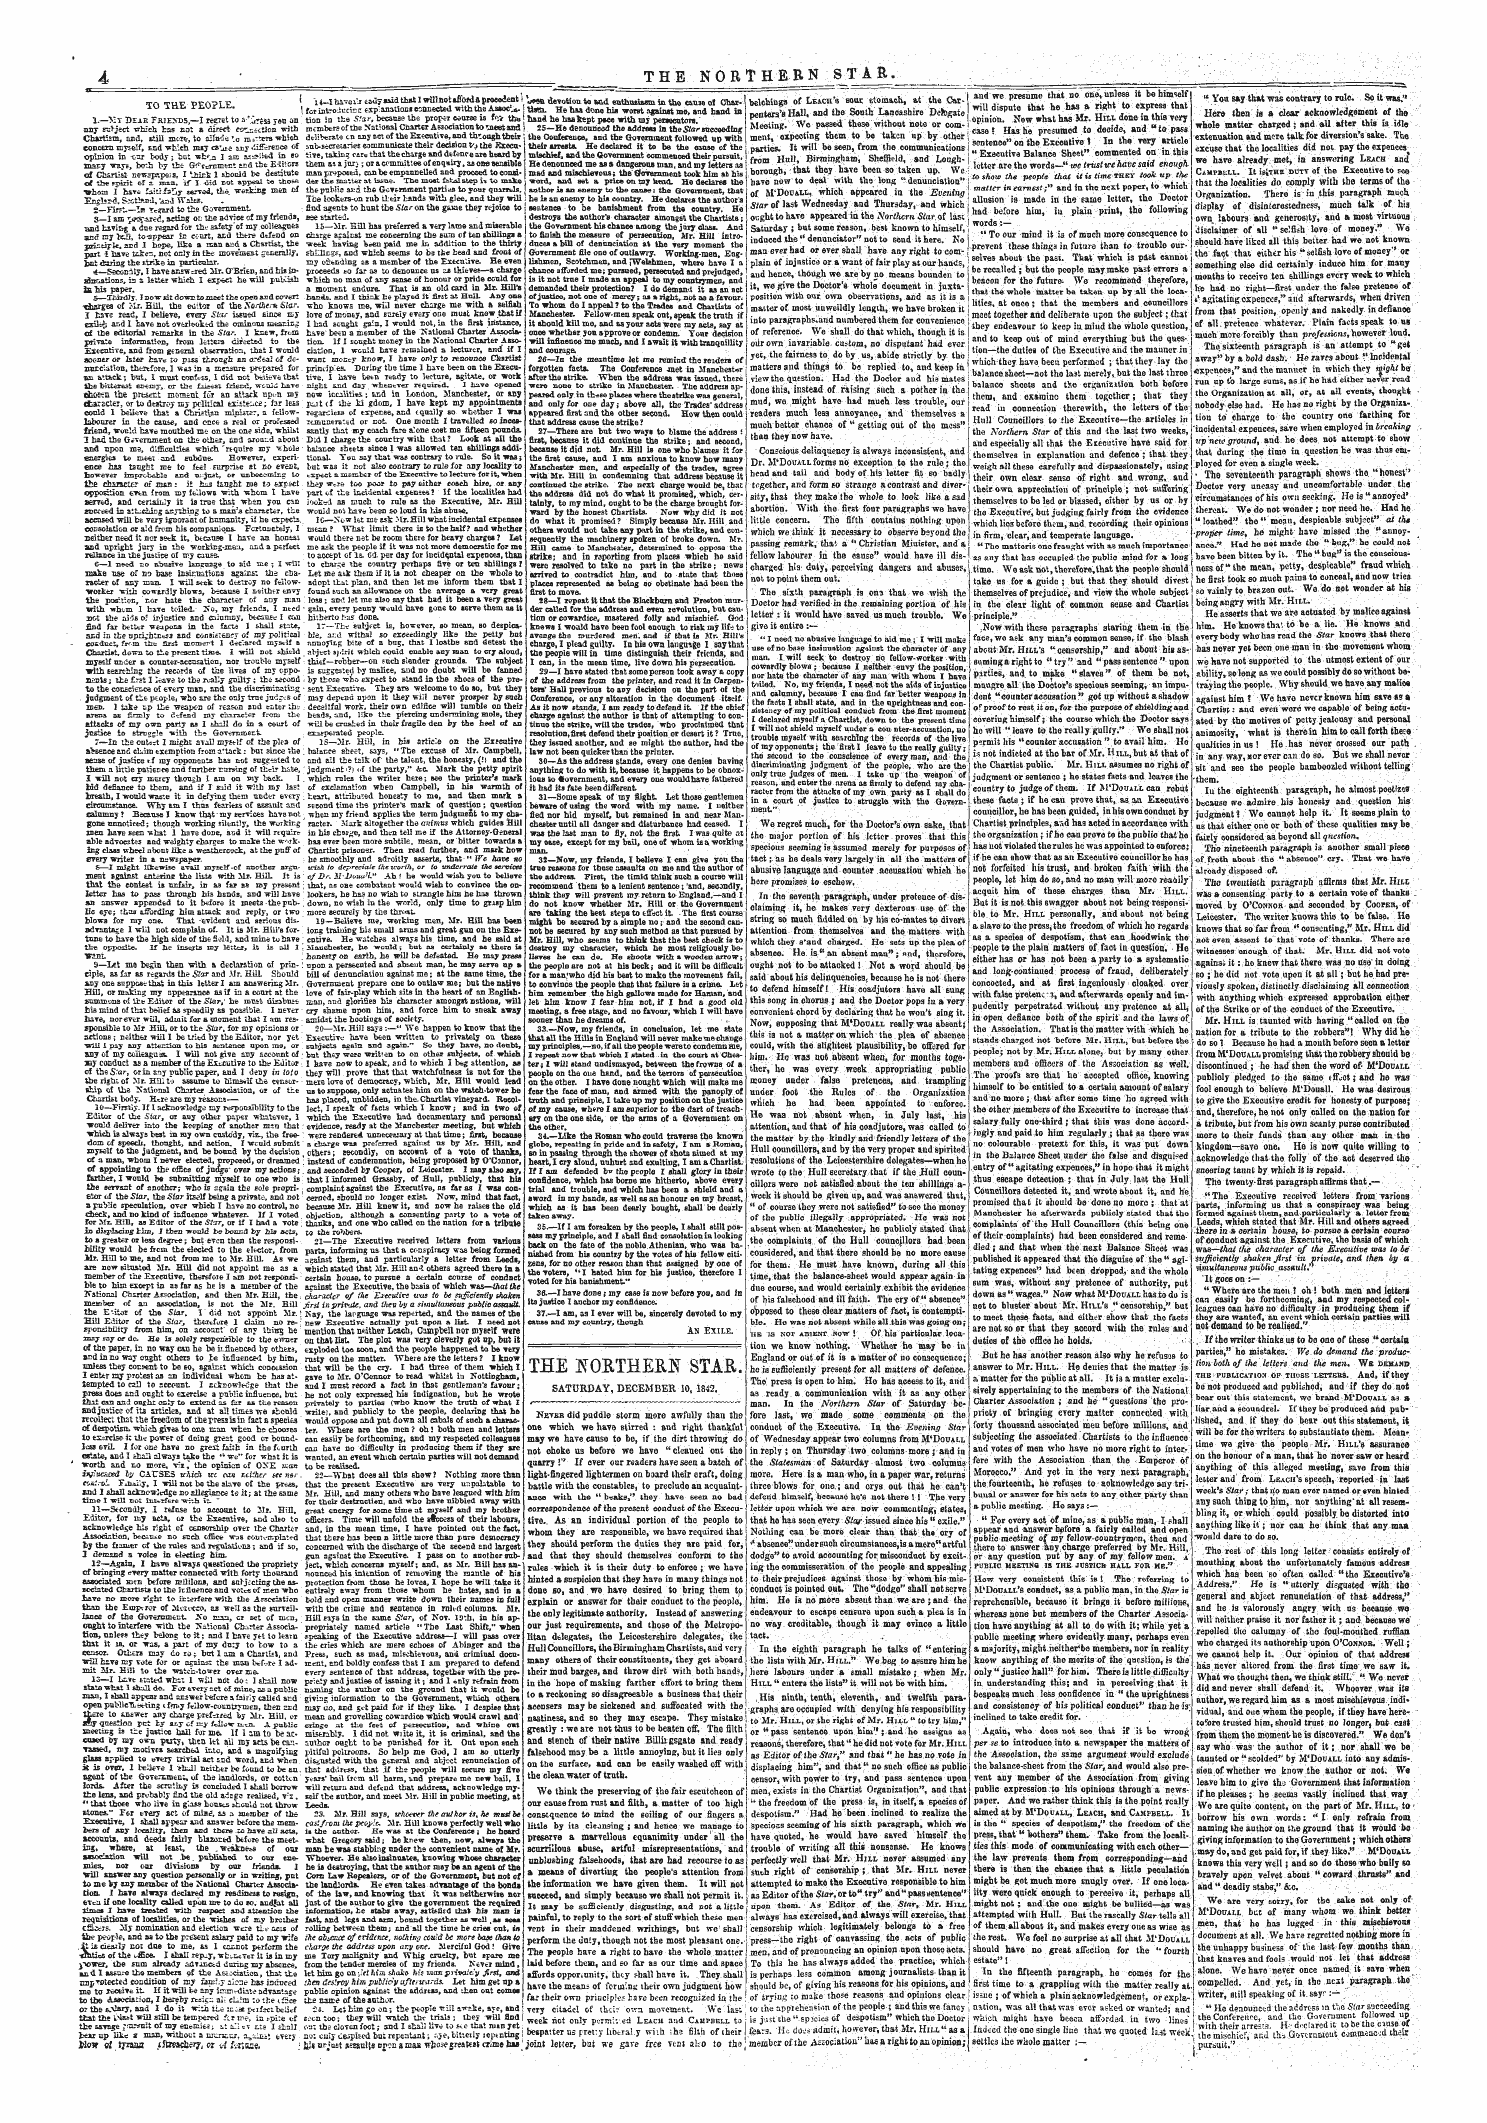 Northern Star (1837-1852): jS F Y, 4th edition: 4